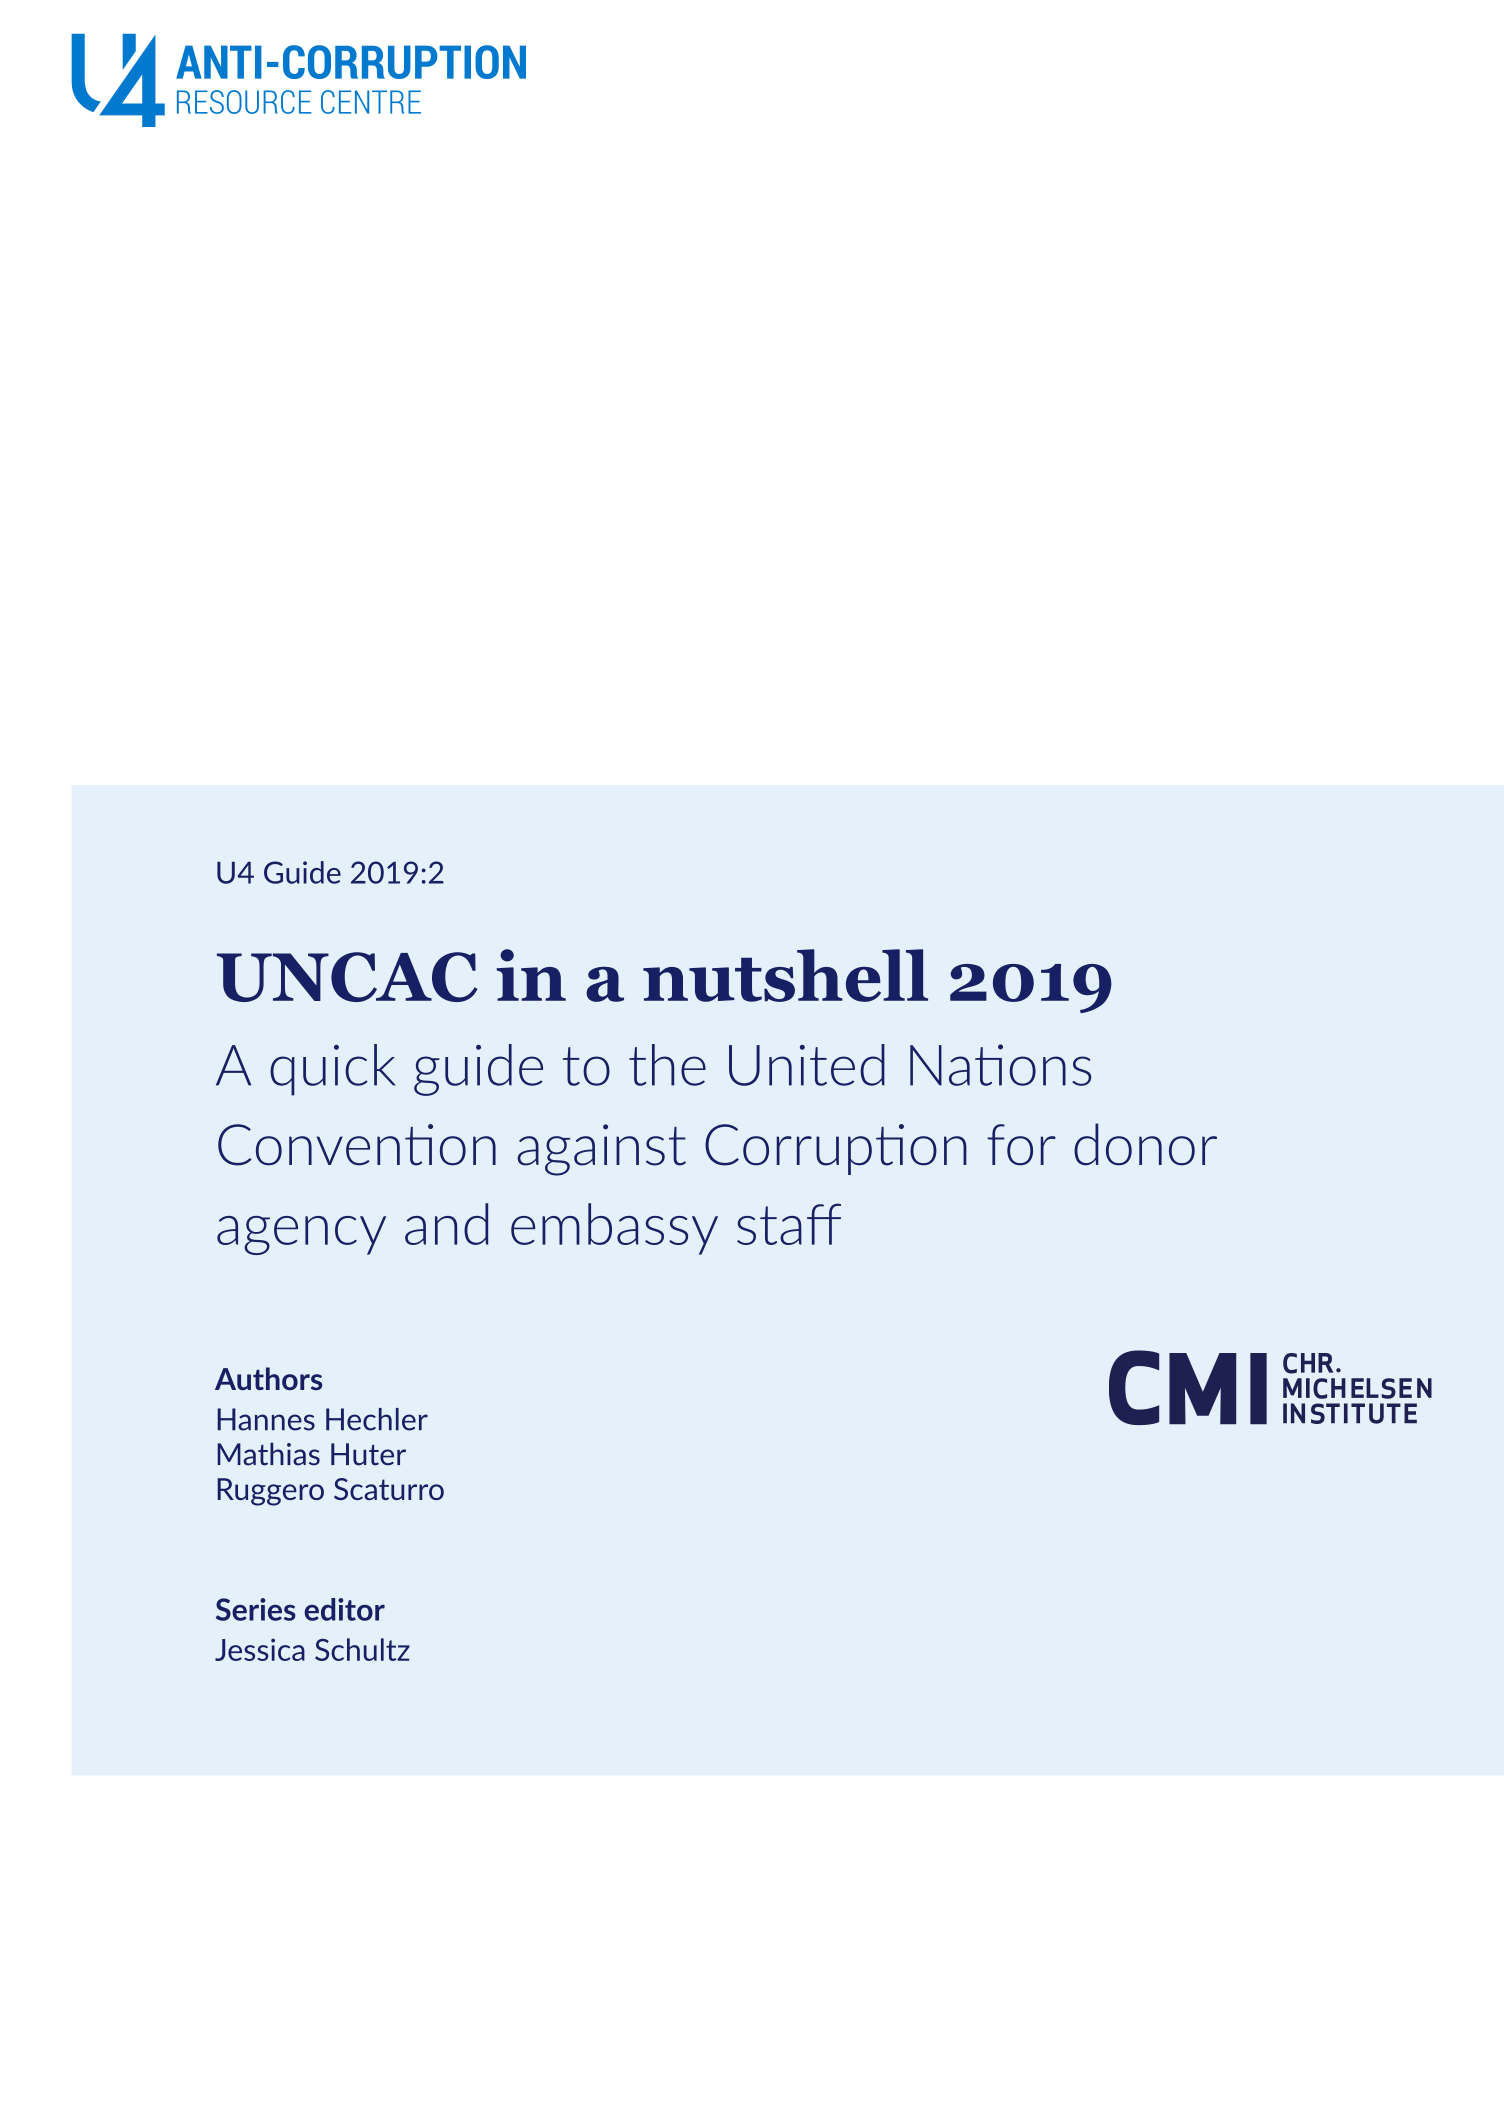 UNCAC in a nutshell 2019